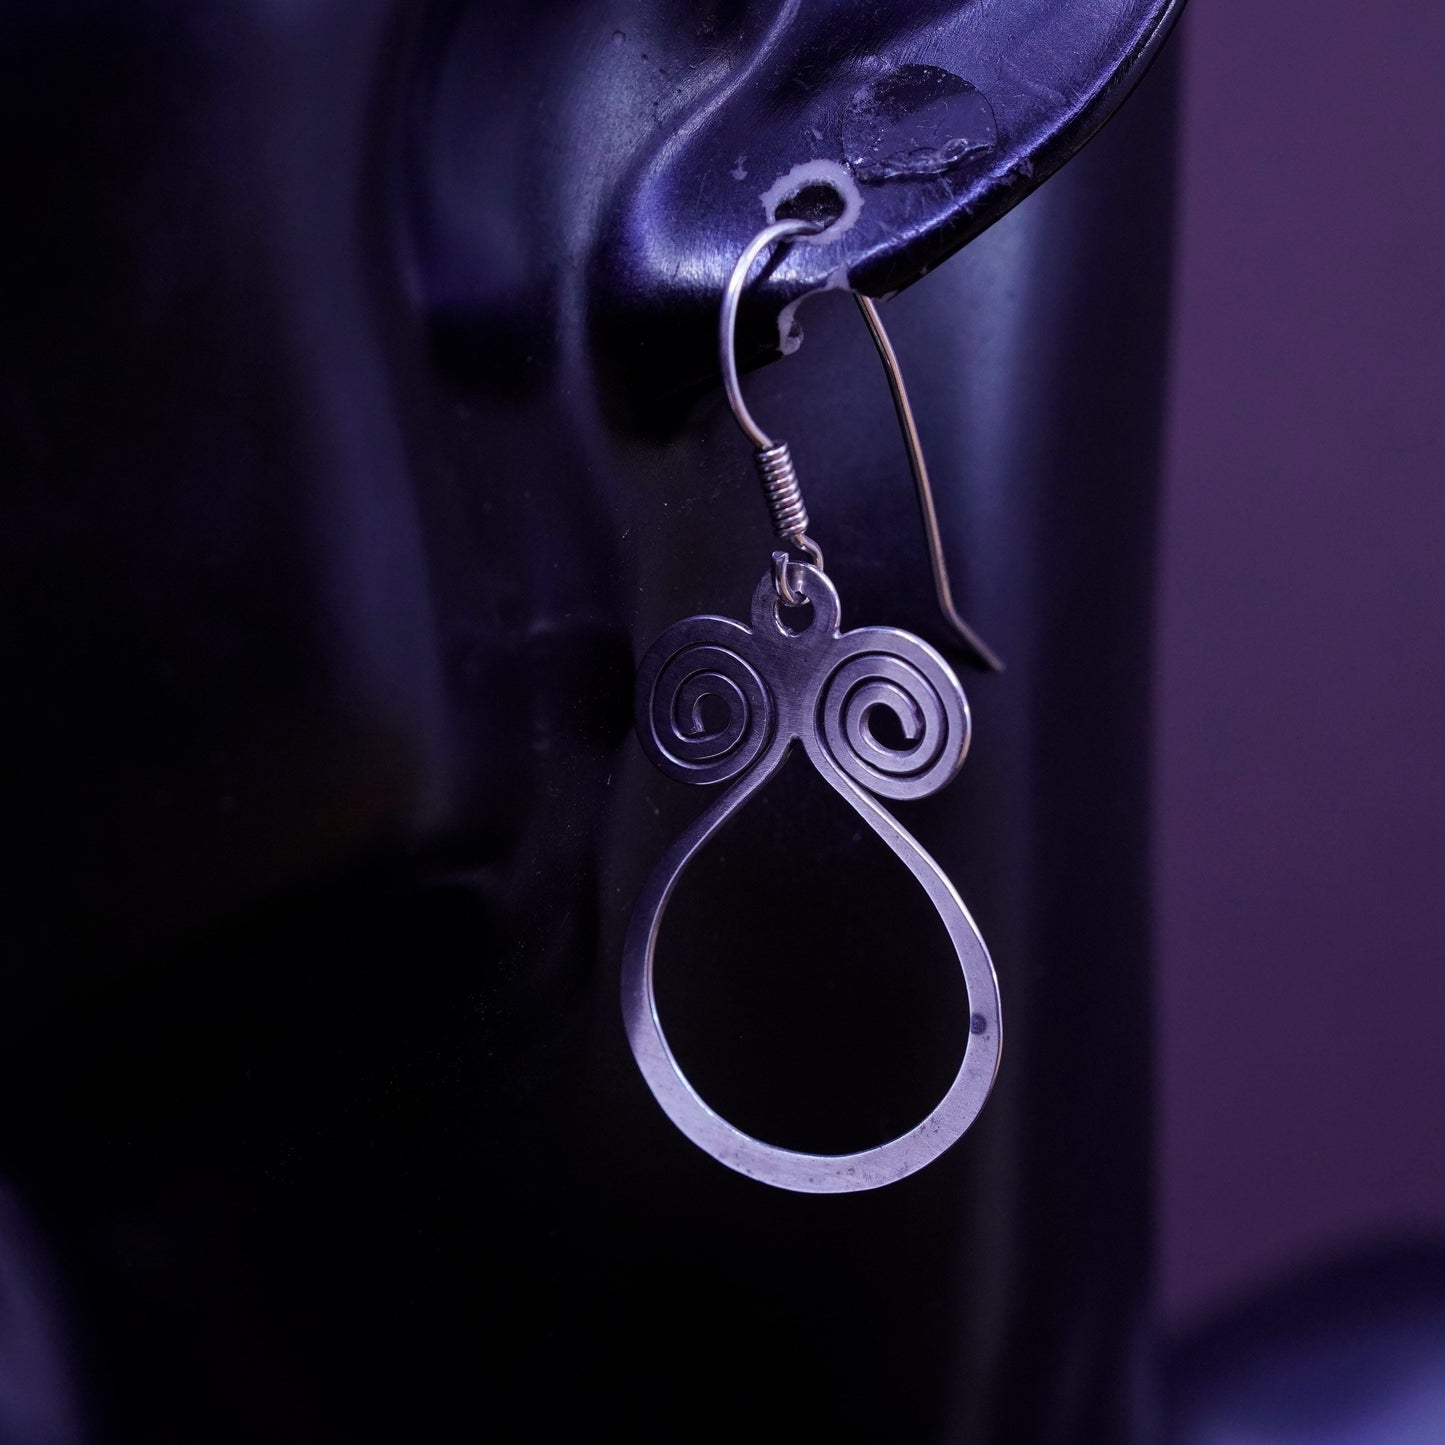 Vintage Sterling 925 silver handmade earrings with swirly dangle